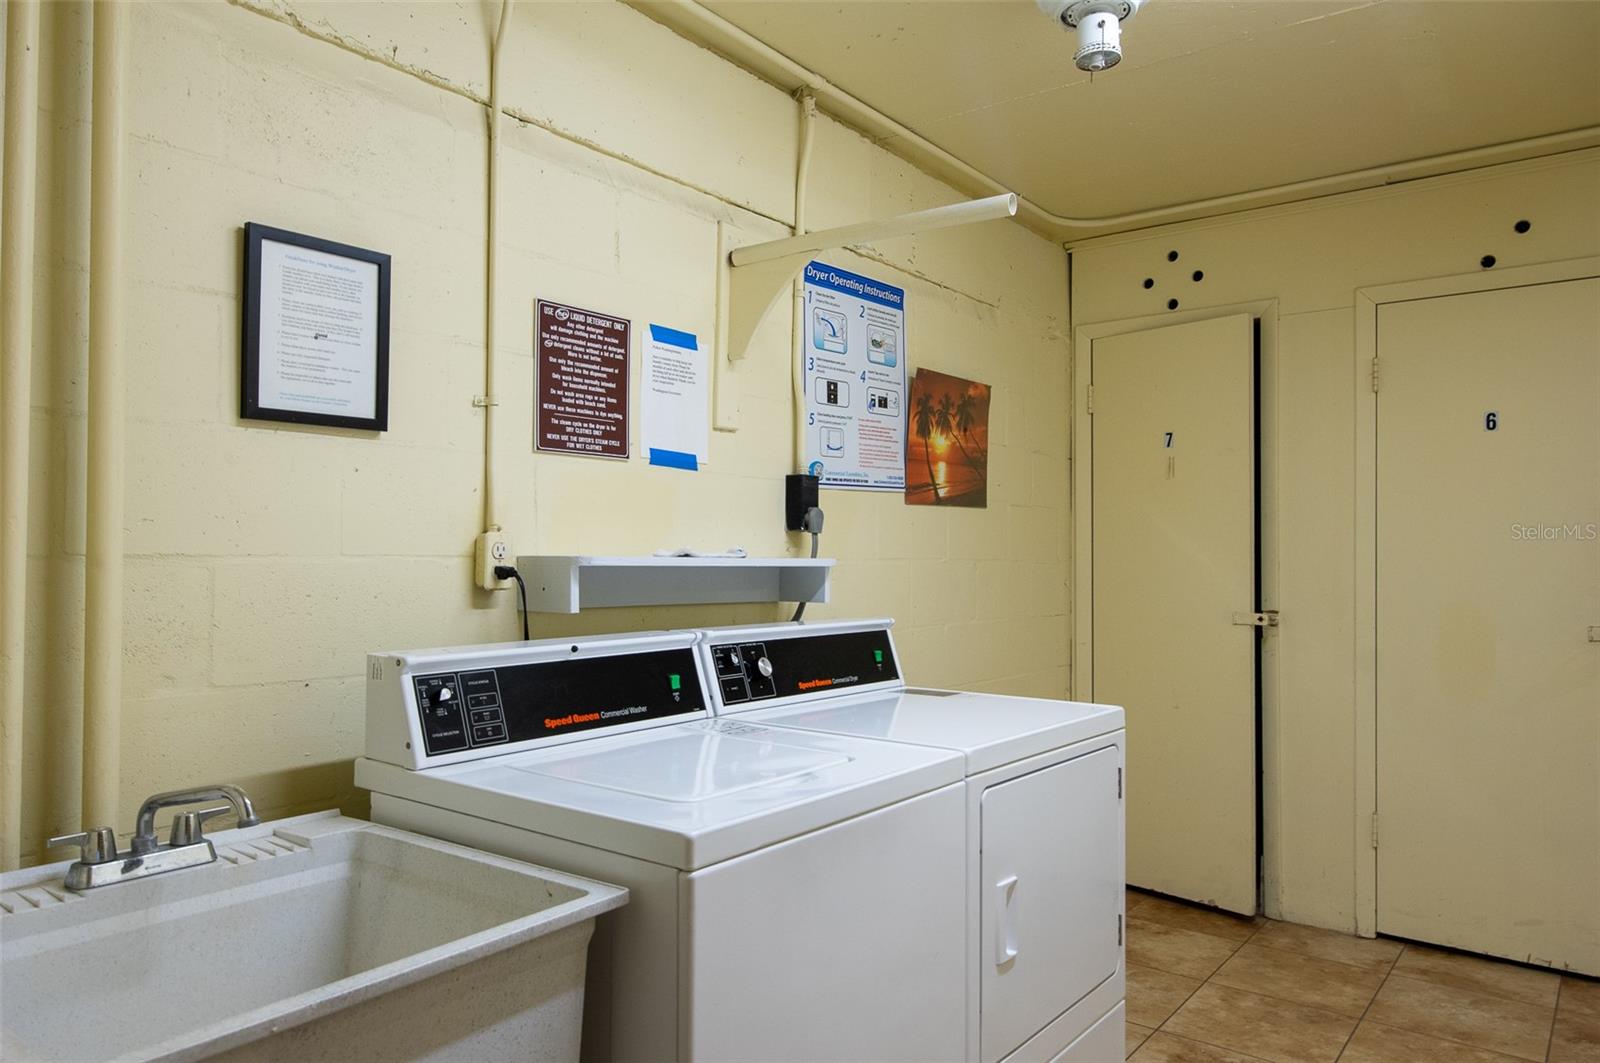 Washington Laundry room on 2nd floor